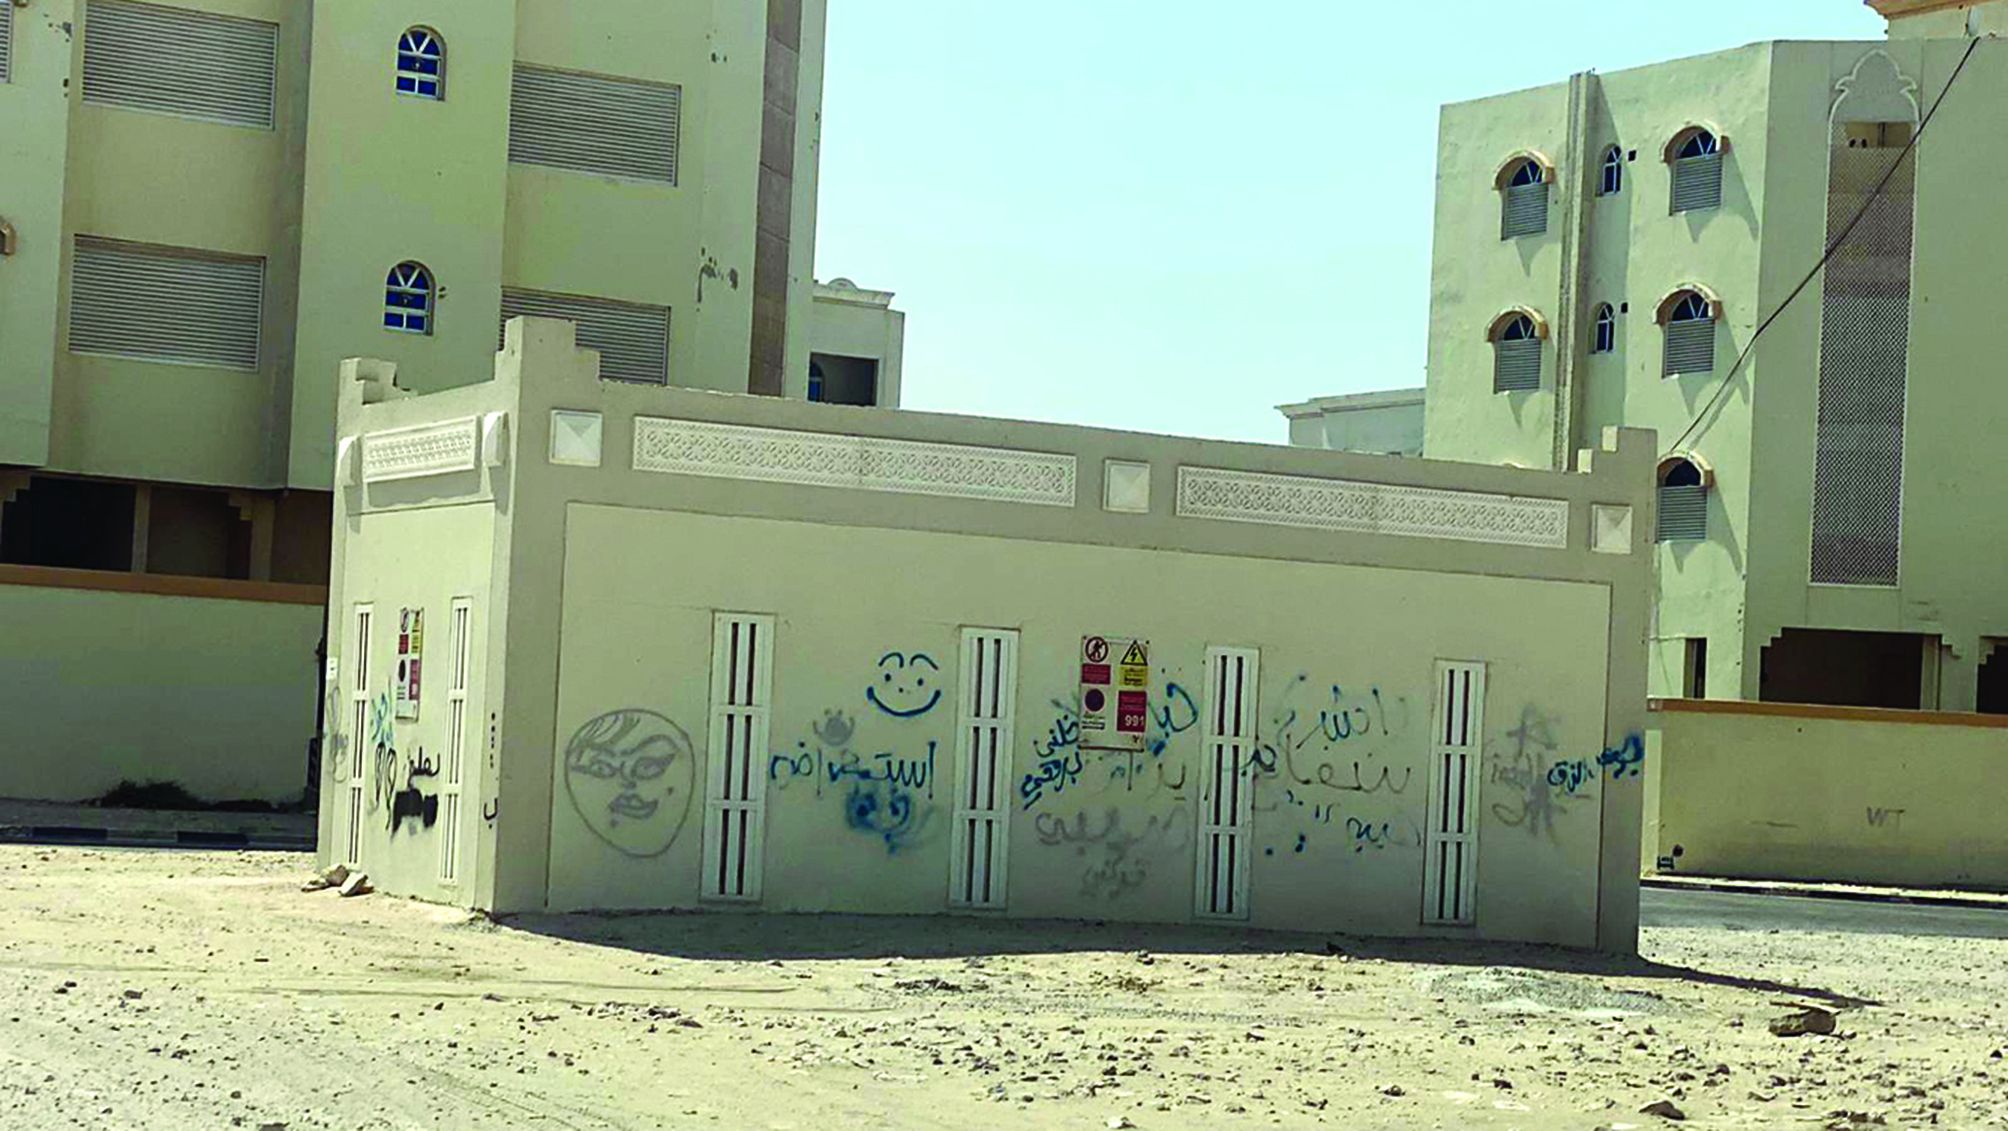 Graffiti distorts public facilities